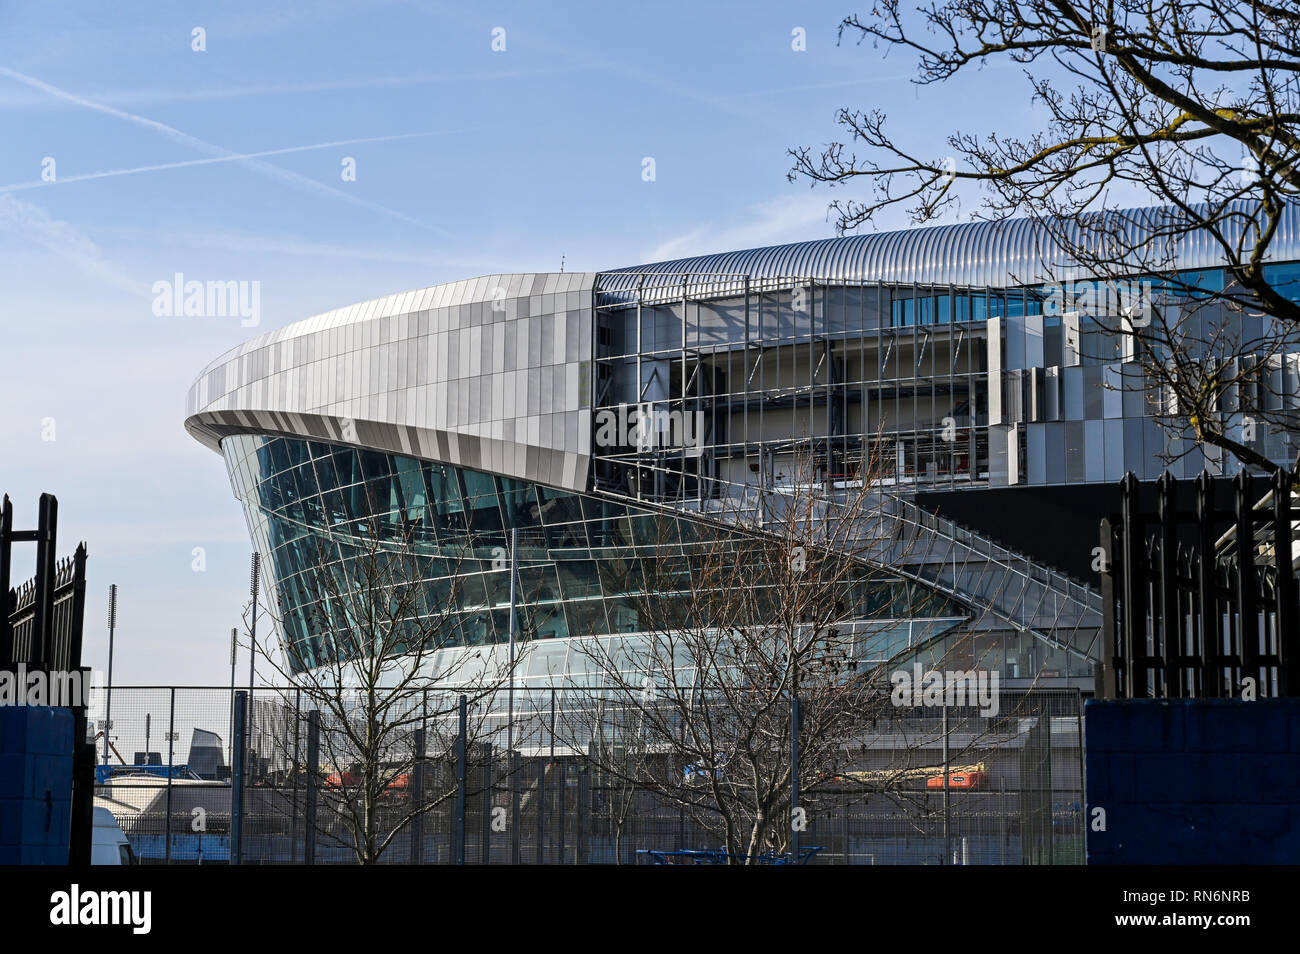 Tottenham London UK 17. Februar 2019 - Die neue Tottenham Hotspur Stadion überragt die umliegenden Gebäude in Tottenham High Road Stockfoto